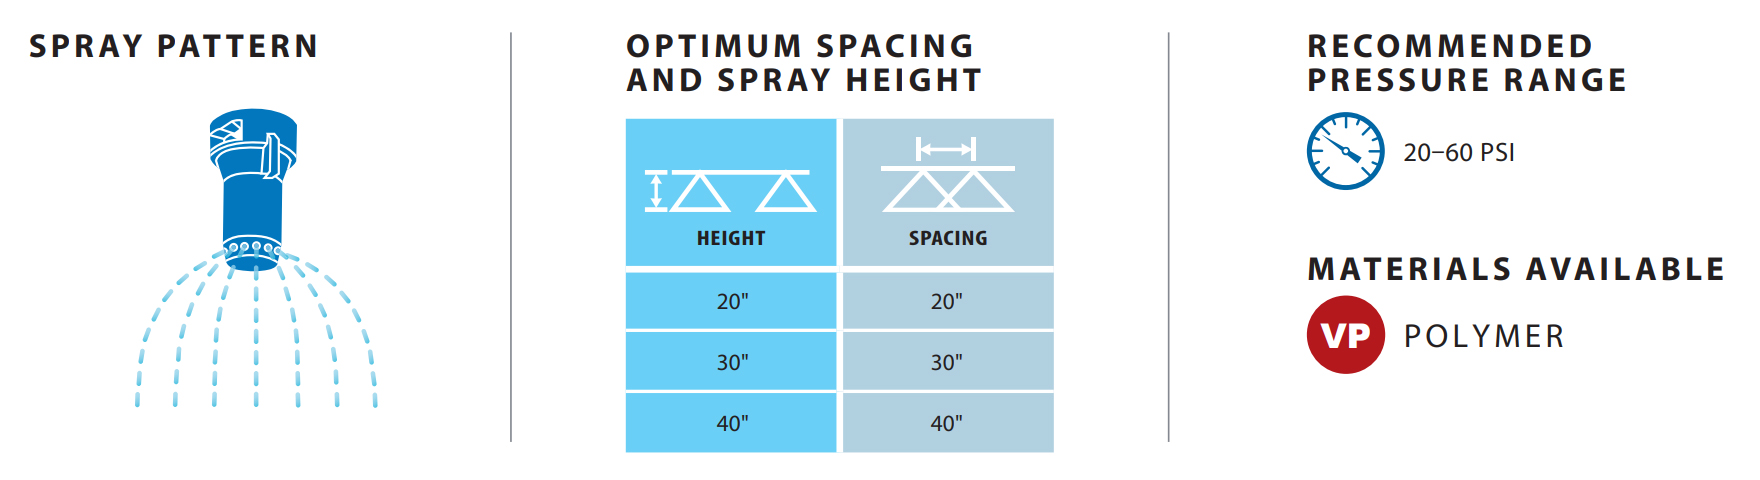 SJ7A spray tip performance details